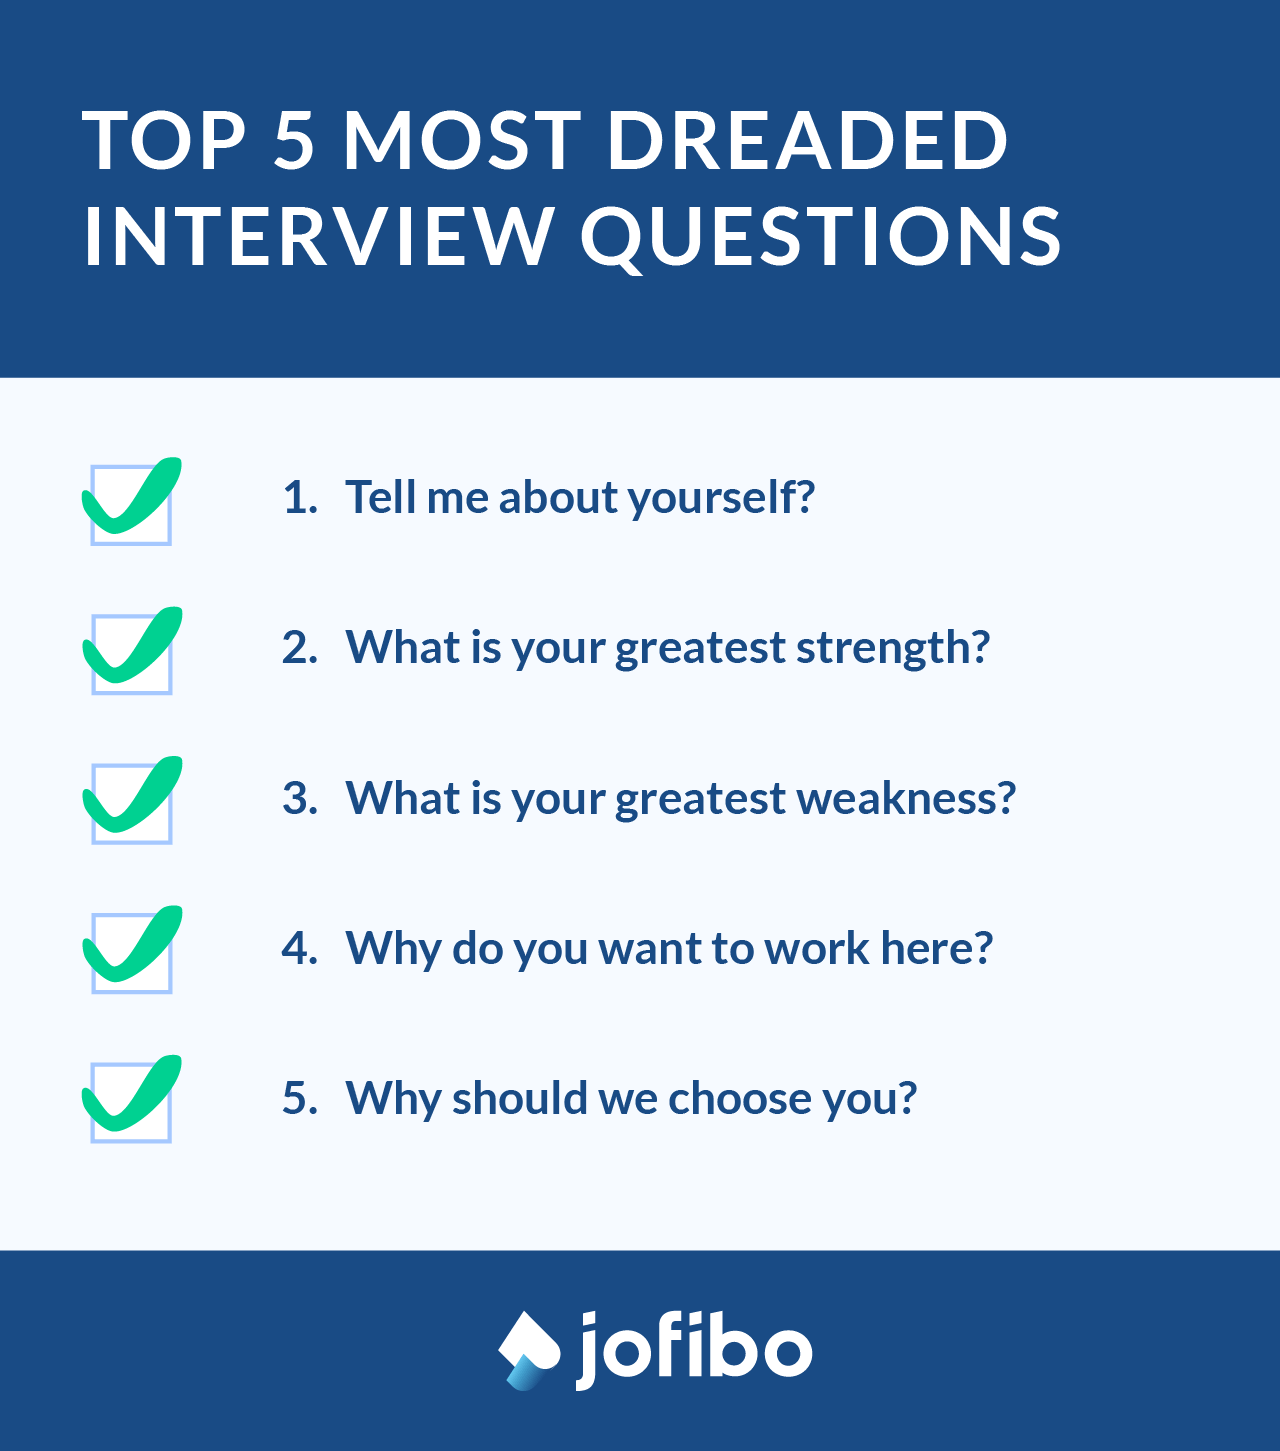 Interviewing questions for a job plumber jobs nottingham